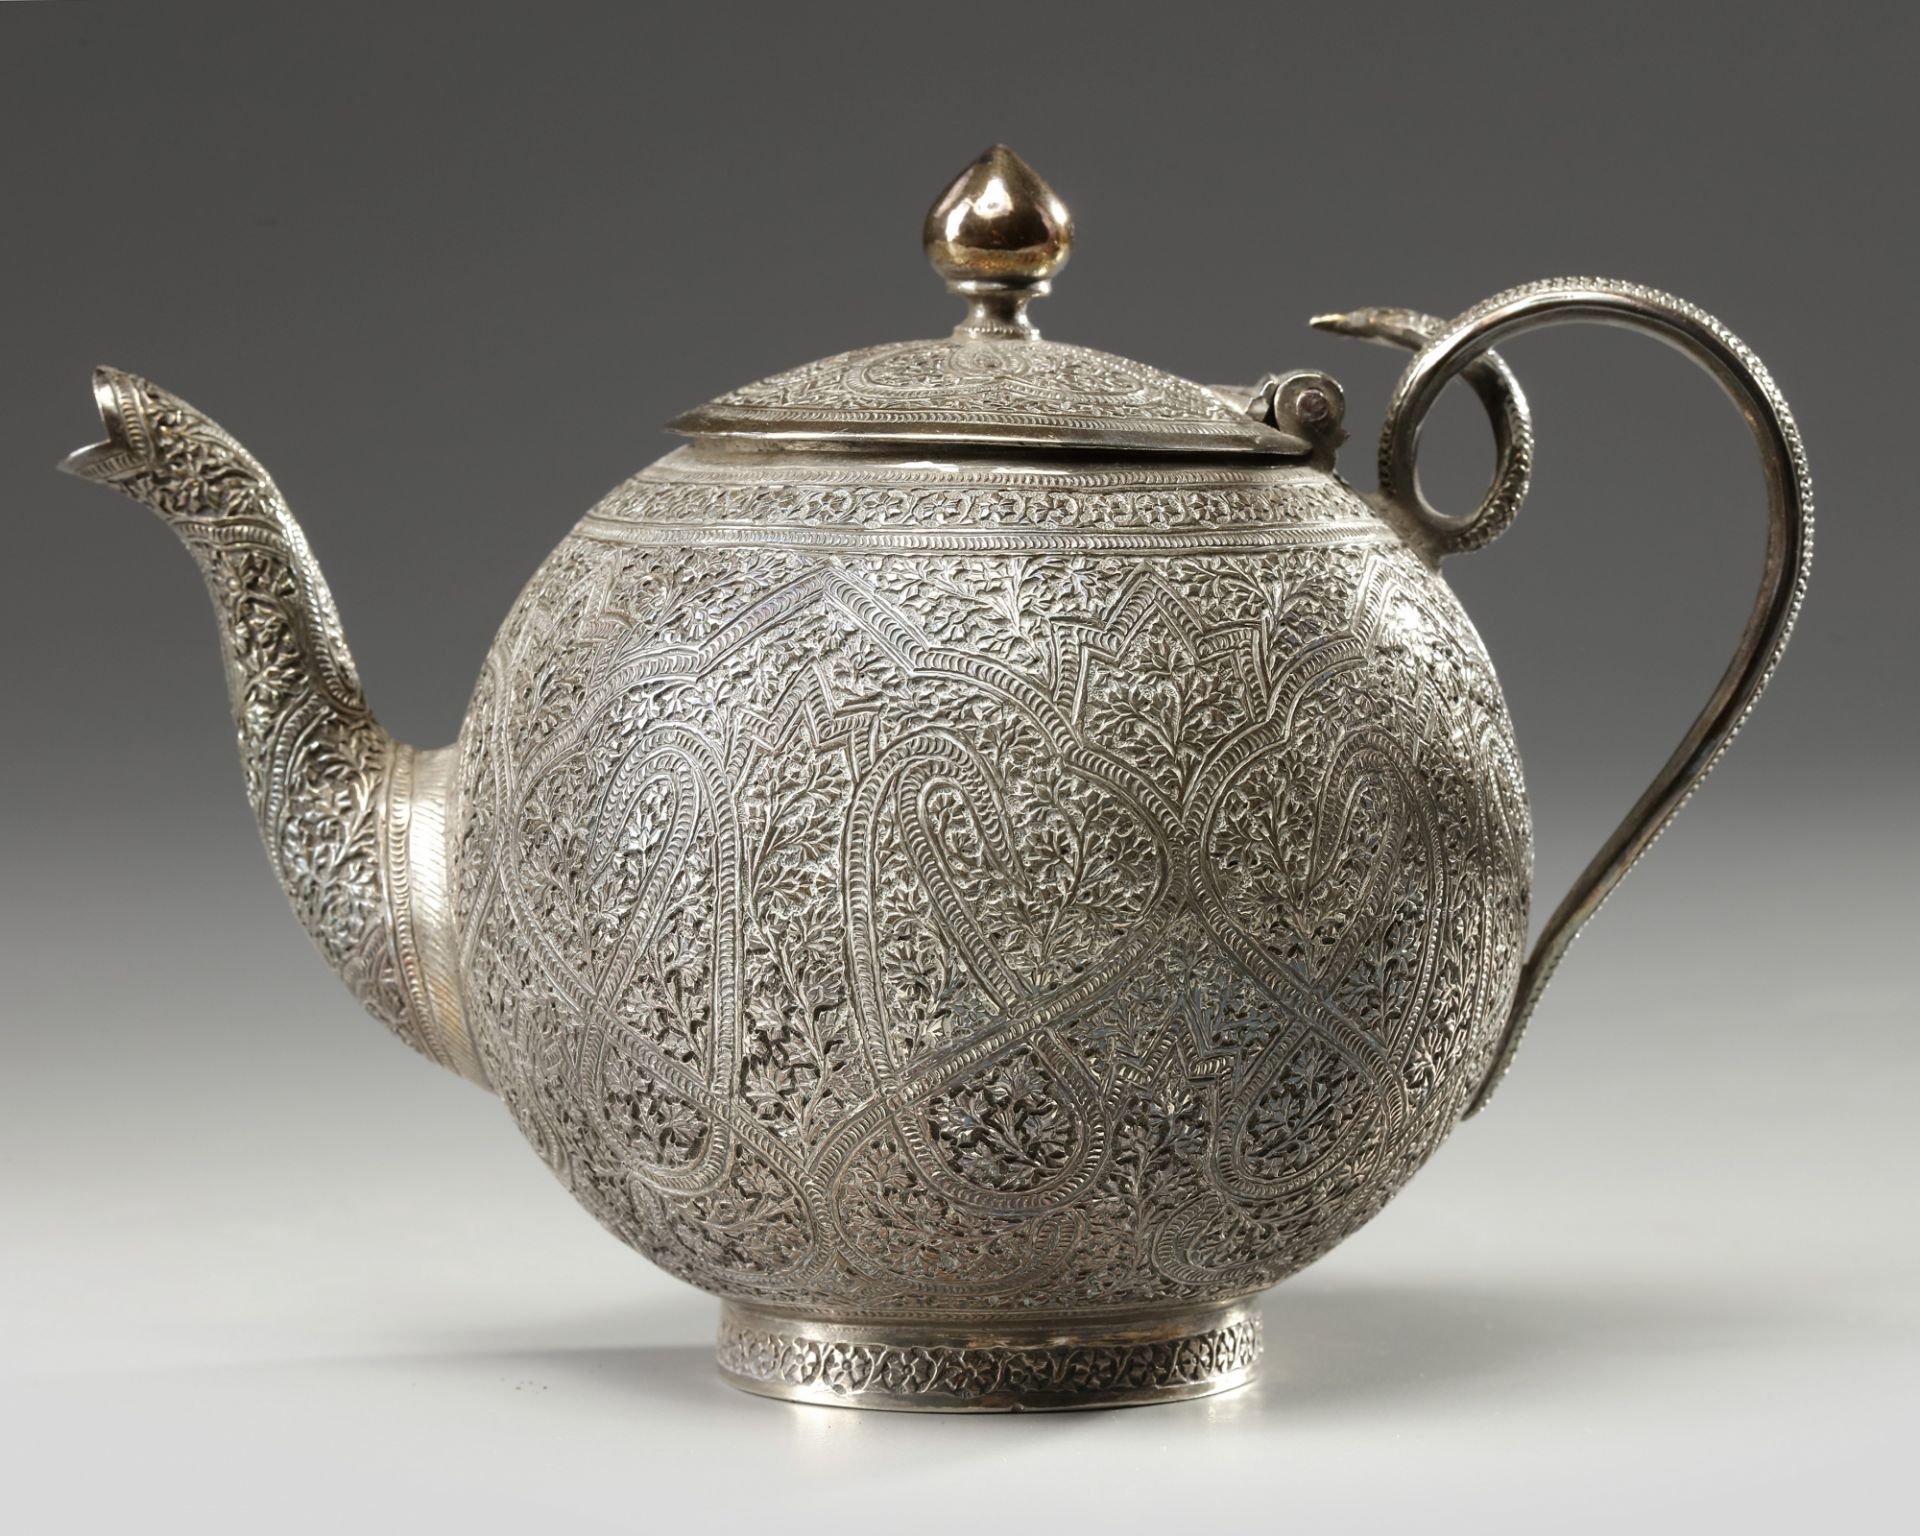 An Islamic Persian silver teapot